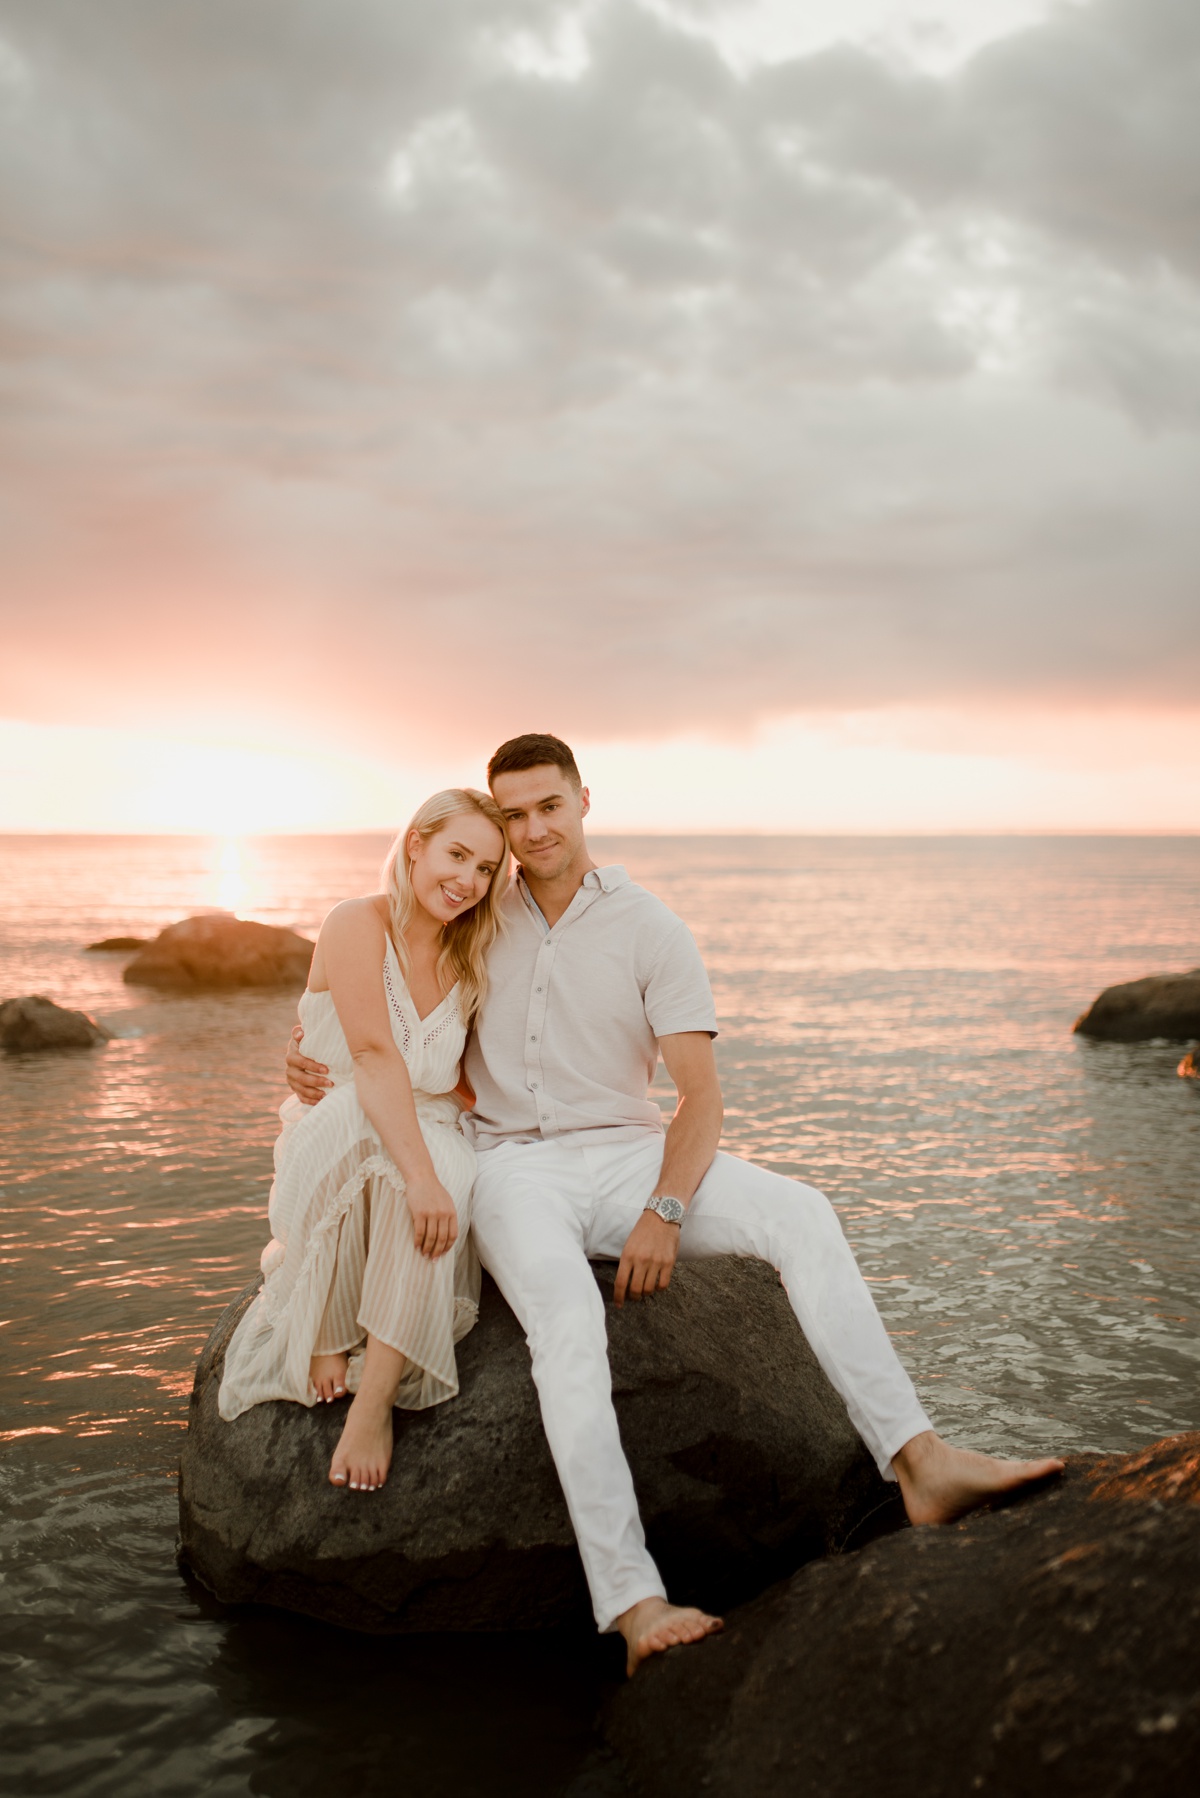 Winnipeg engagement , sunset beach engagement session by Vanessa Renae Photography, a Winnipeg and Kenora wedding photographer